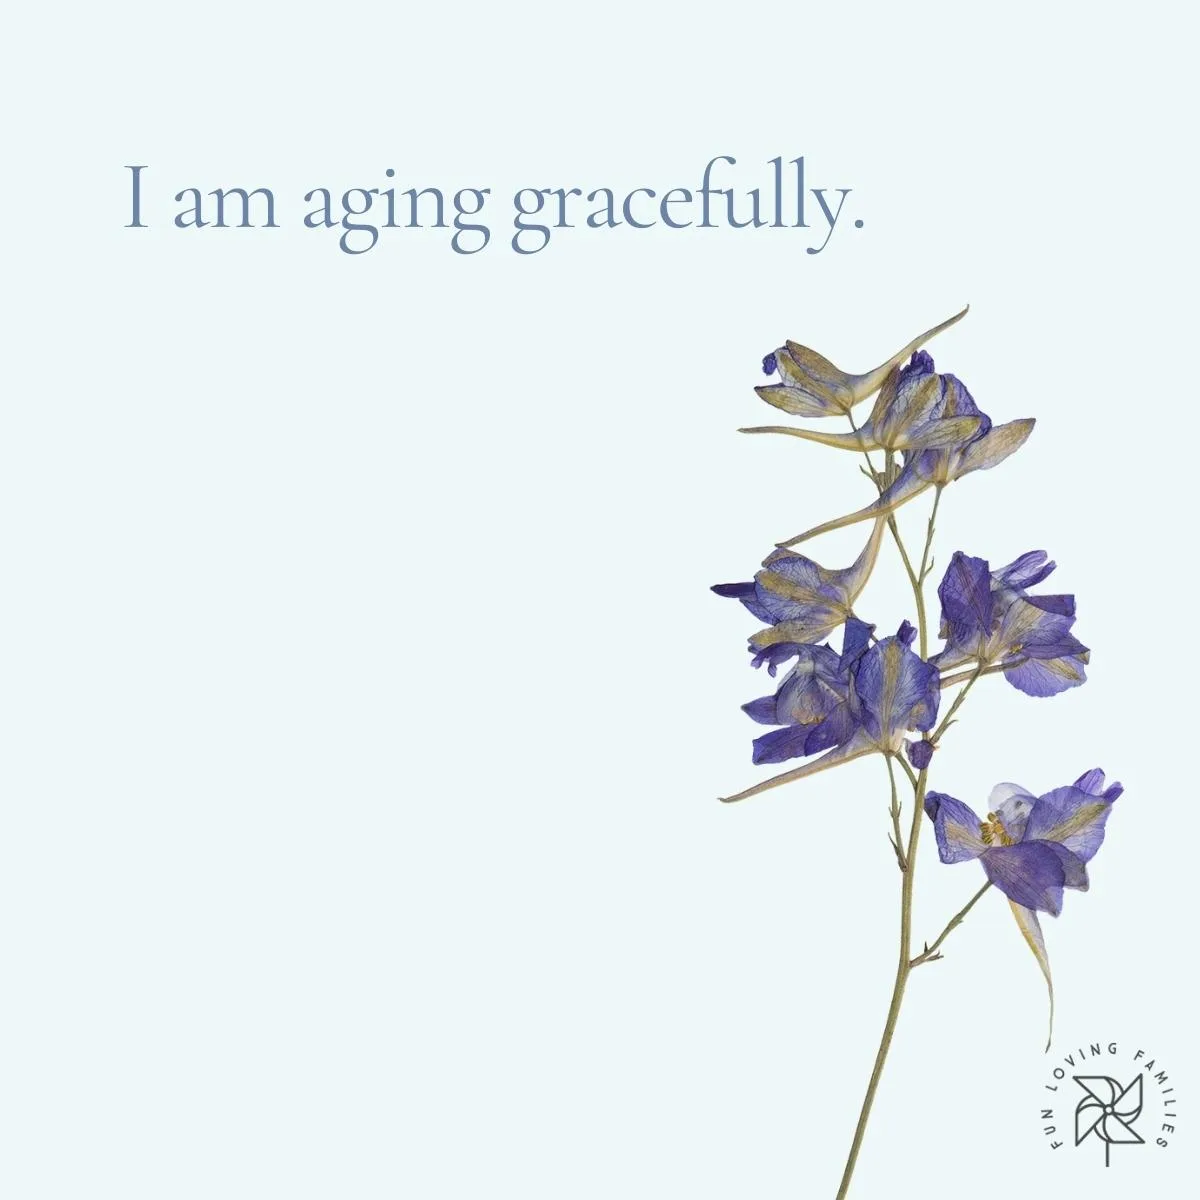 I am aging gracefully affirmation